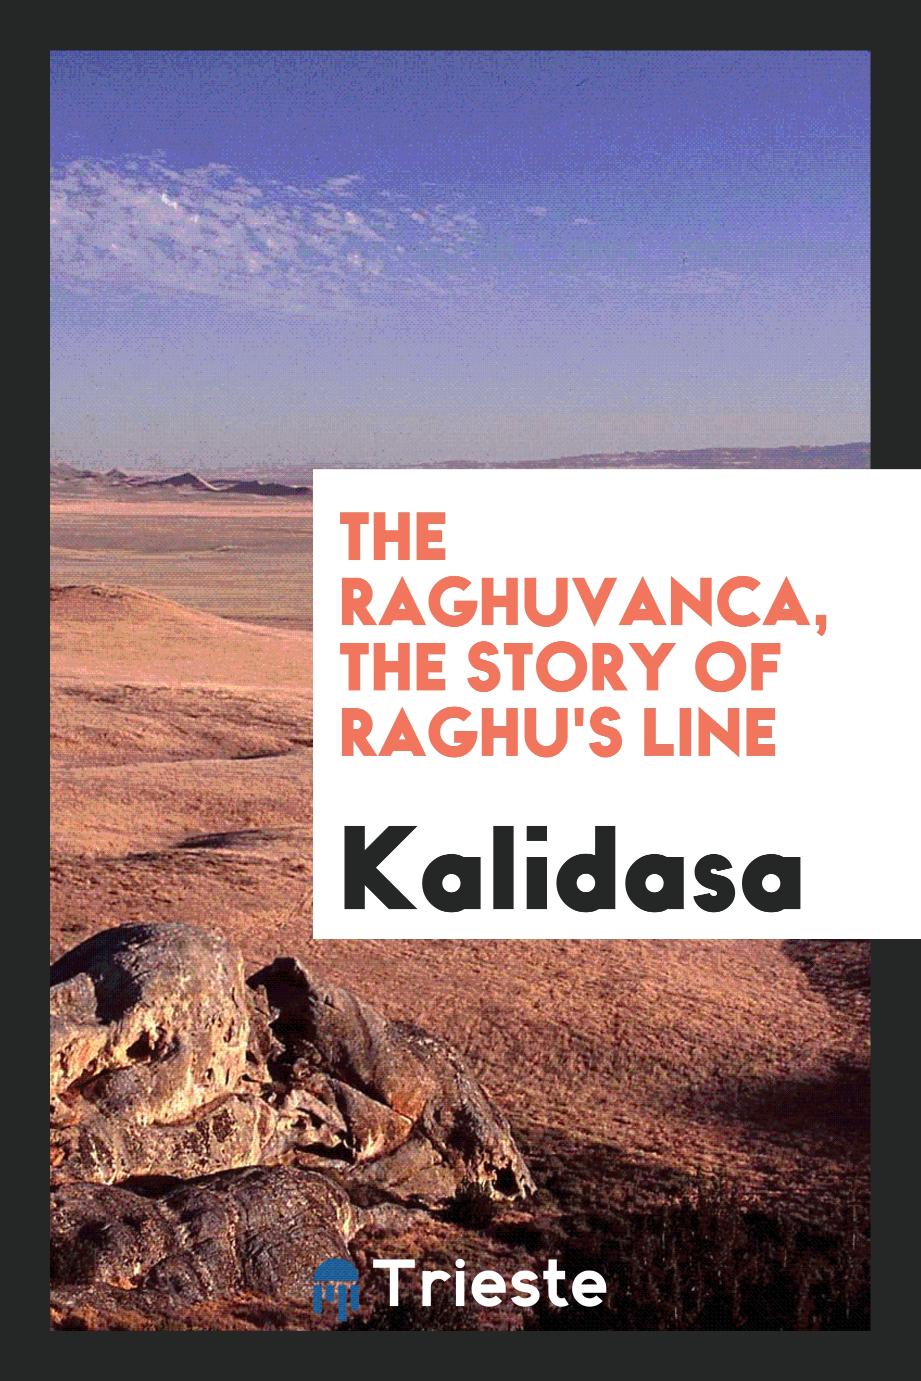 The Raghuvanca, the story of Raghu's line